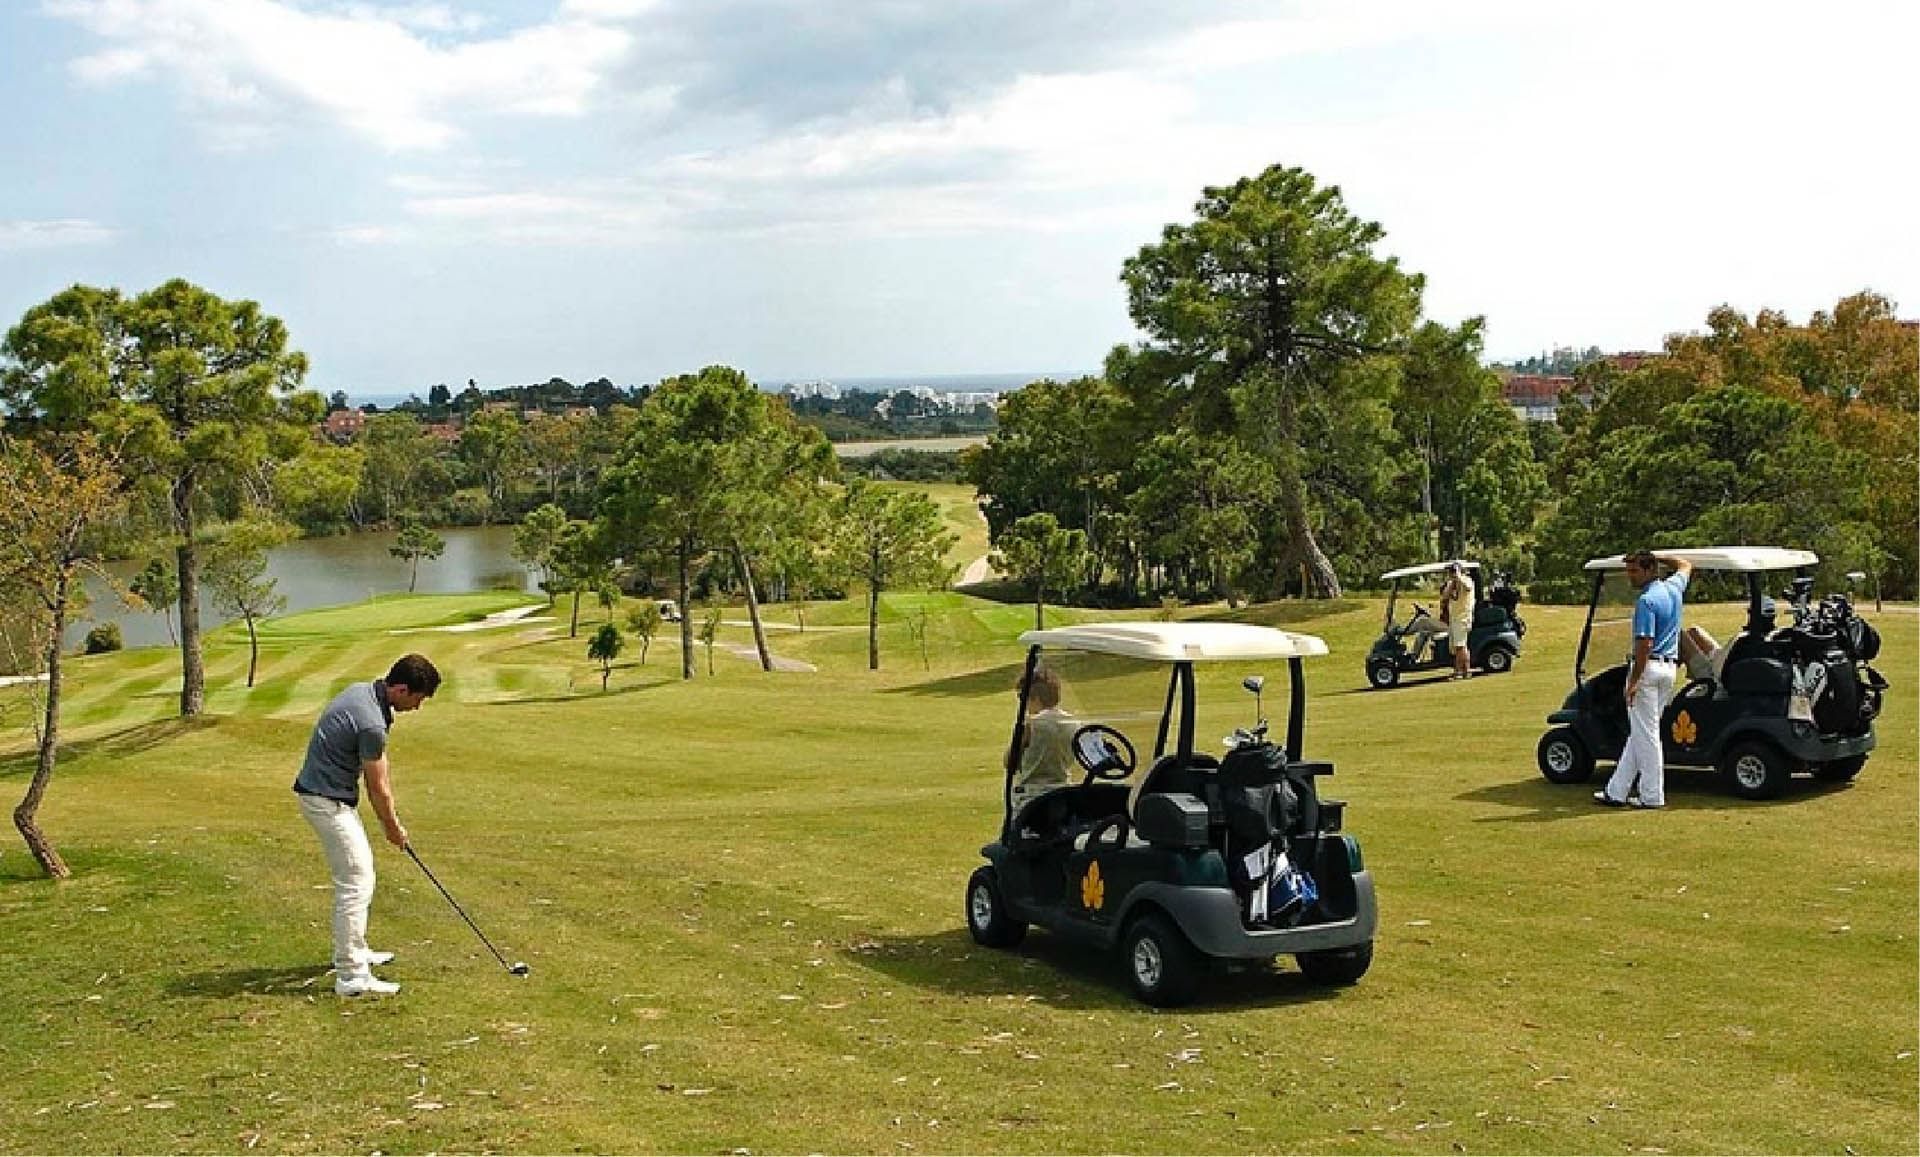 The Golf course & golf carts at Marbella Club Golf Resort